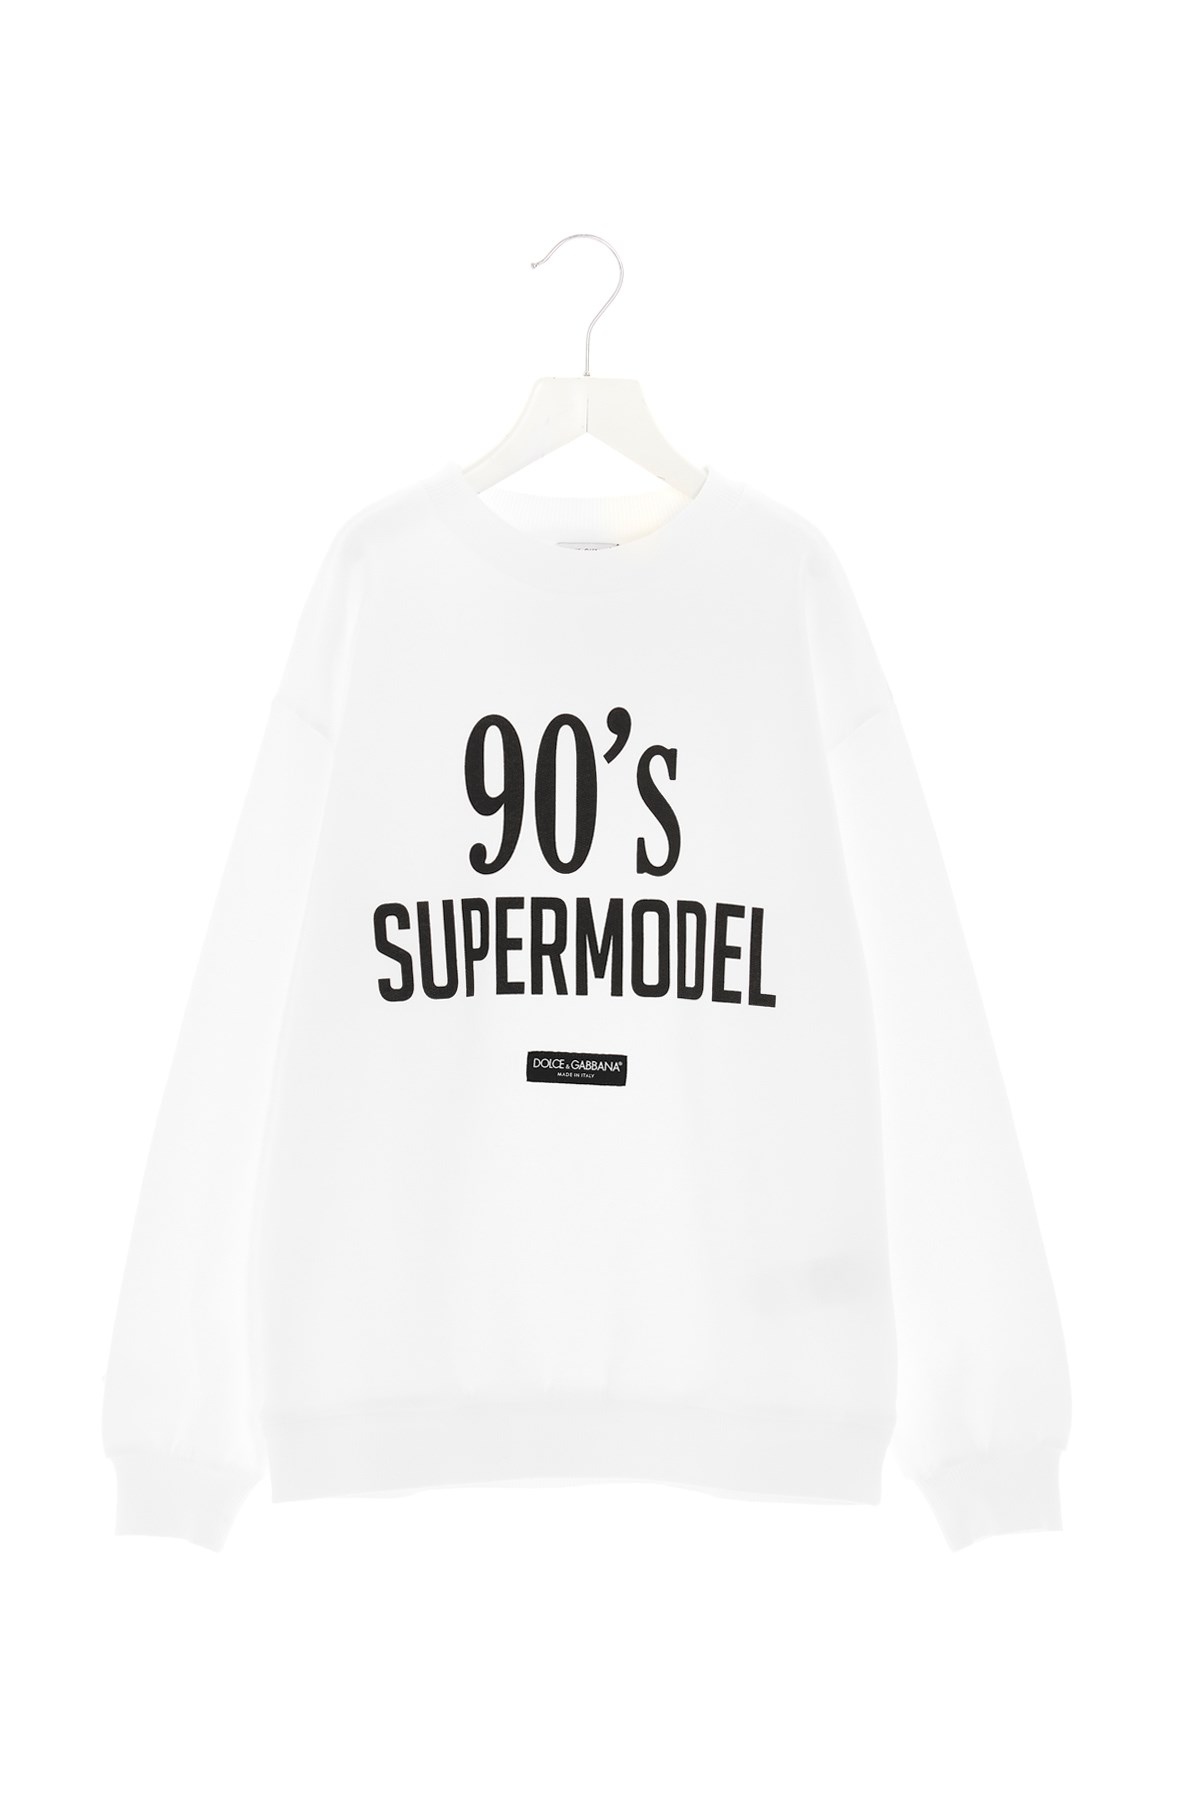 DOLCE & GABBANA '90S Supermodel’ Sweatshirt